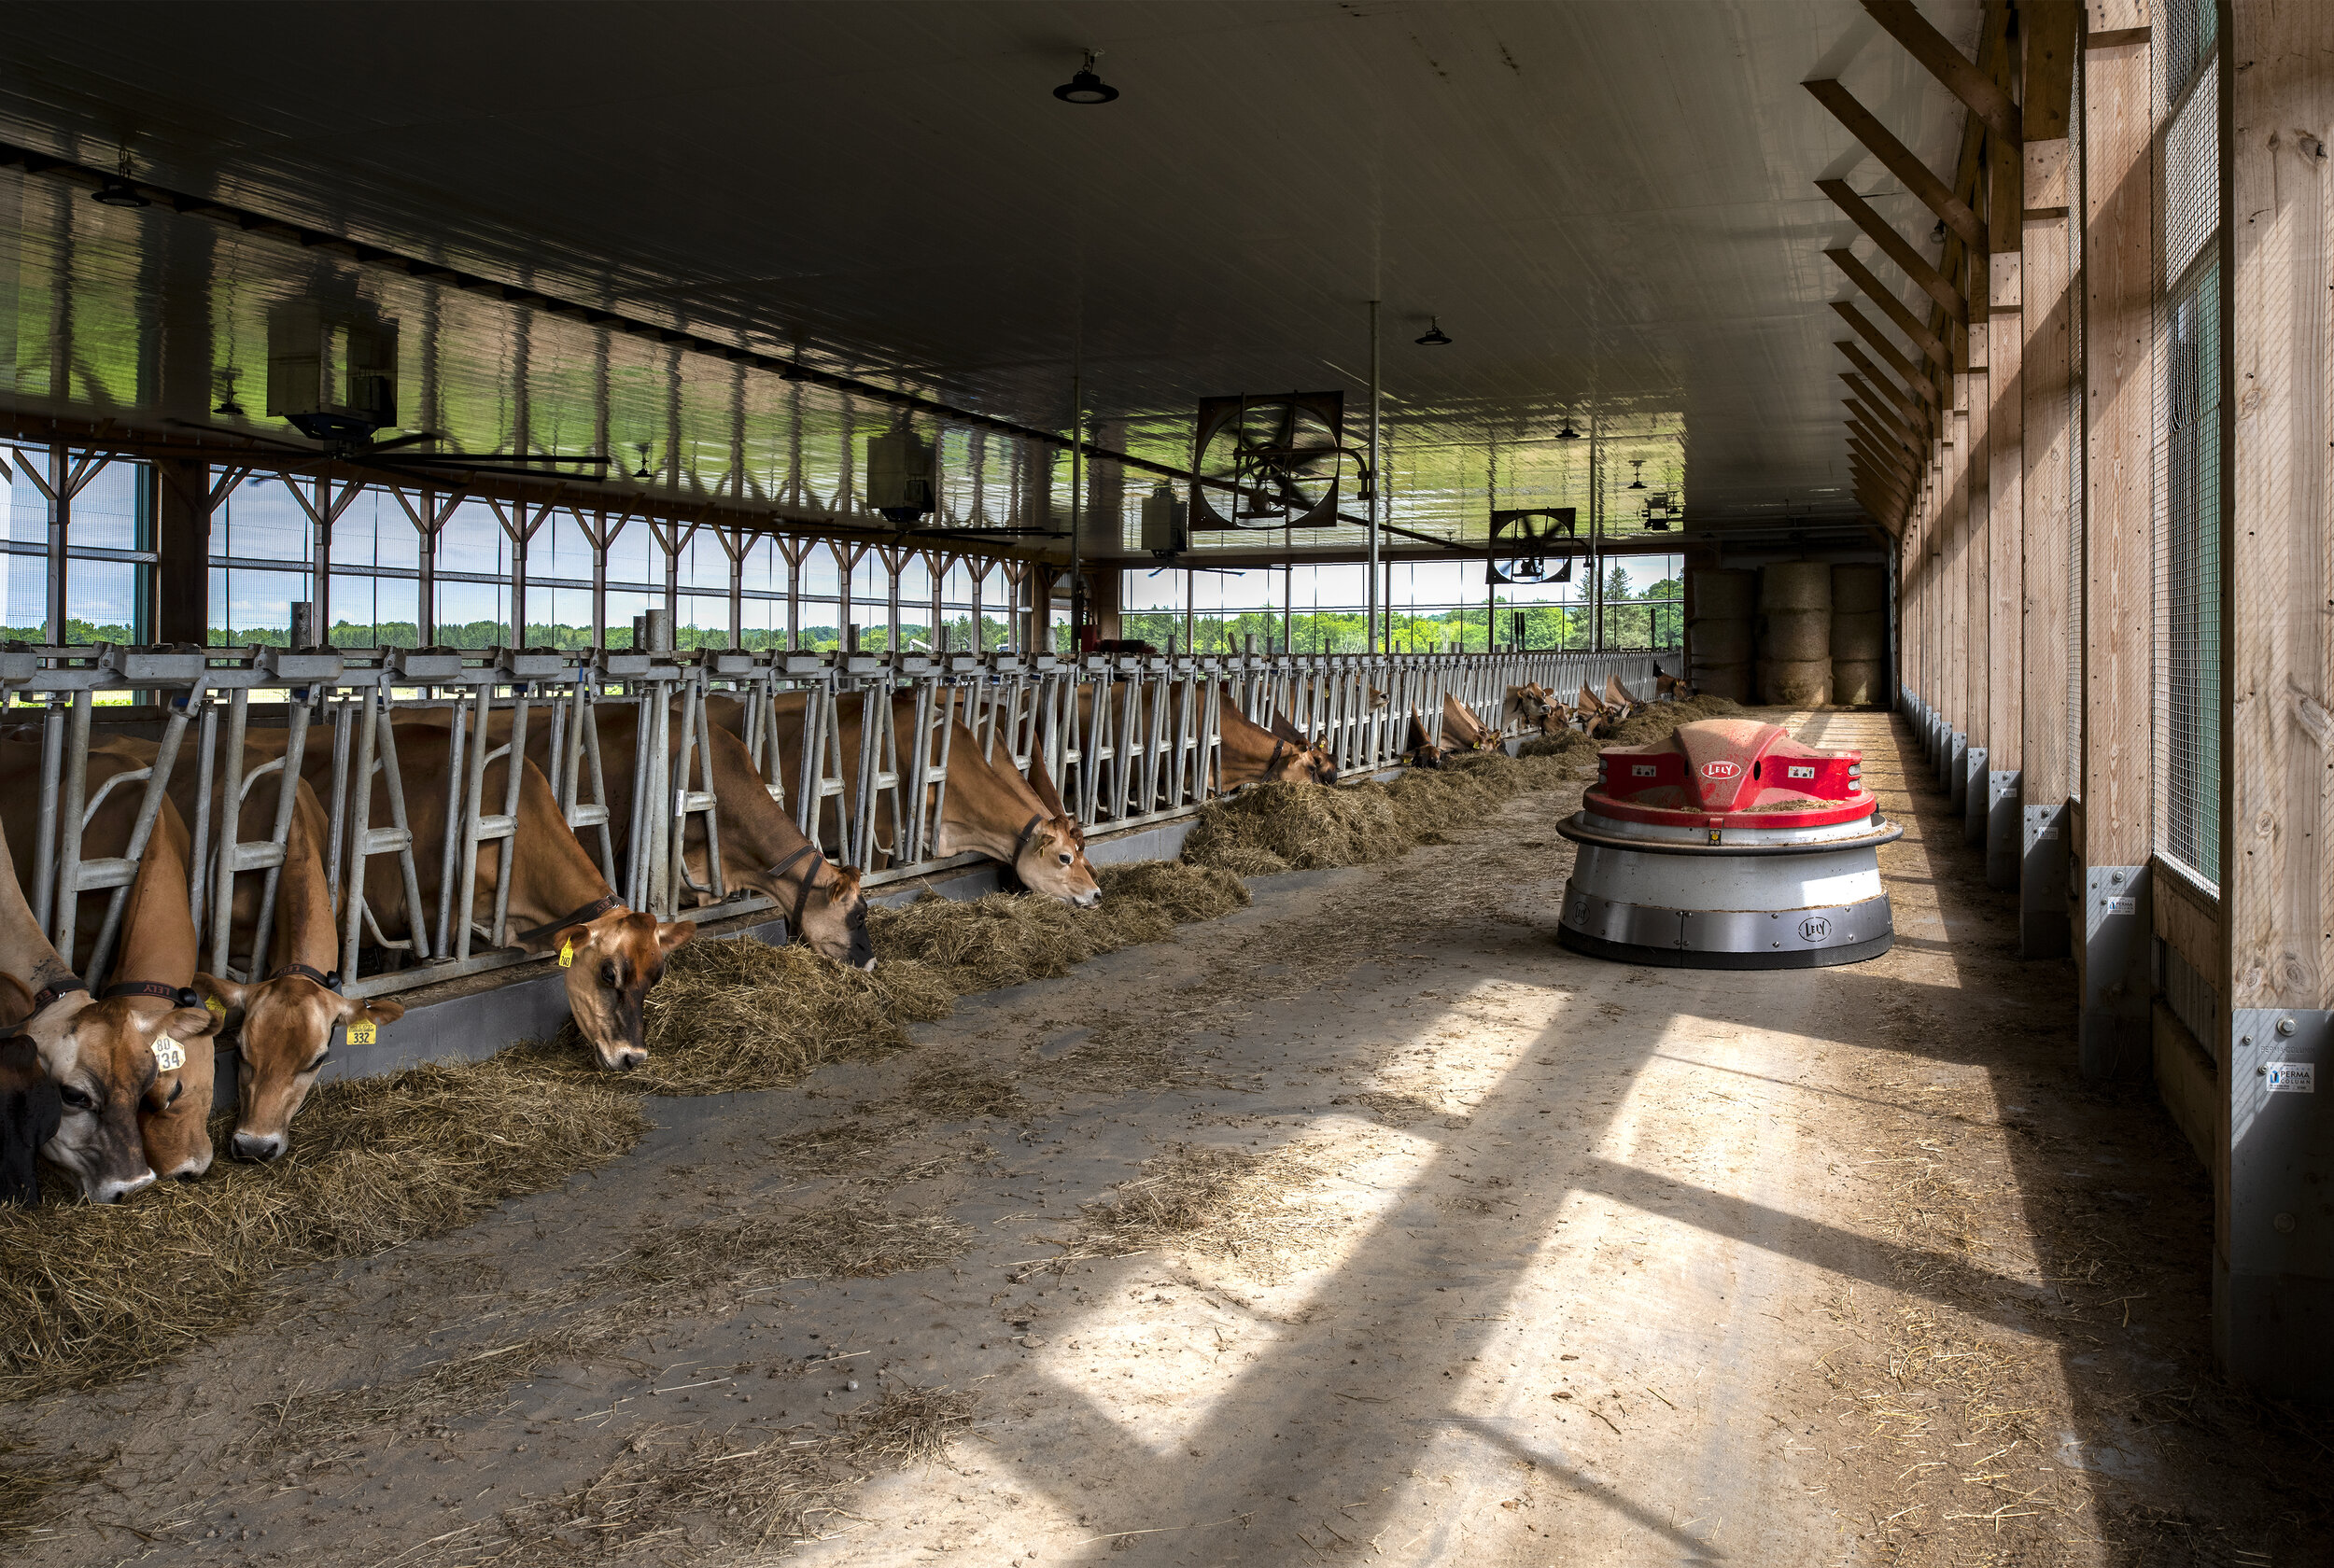 WM Juno sweeping the cow barn 3174.jpg